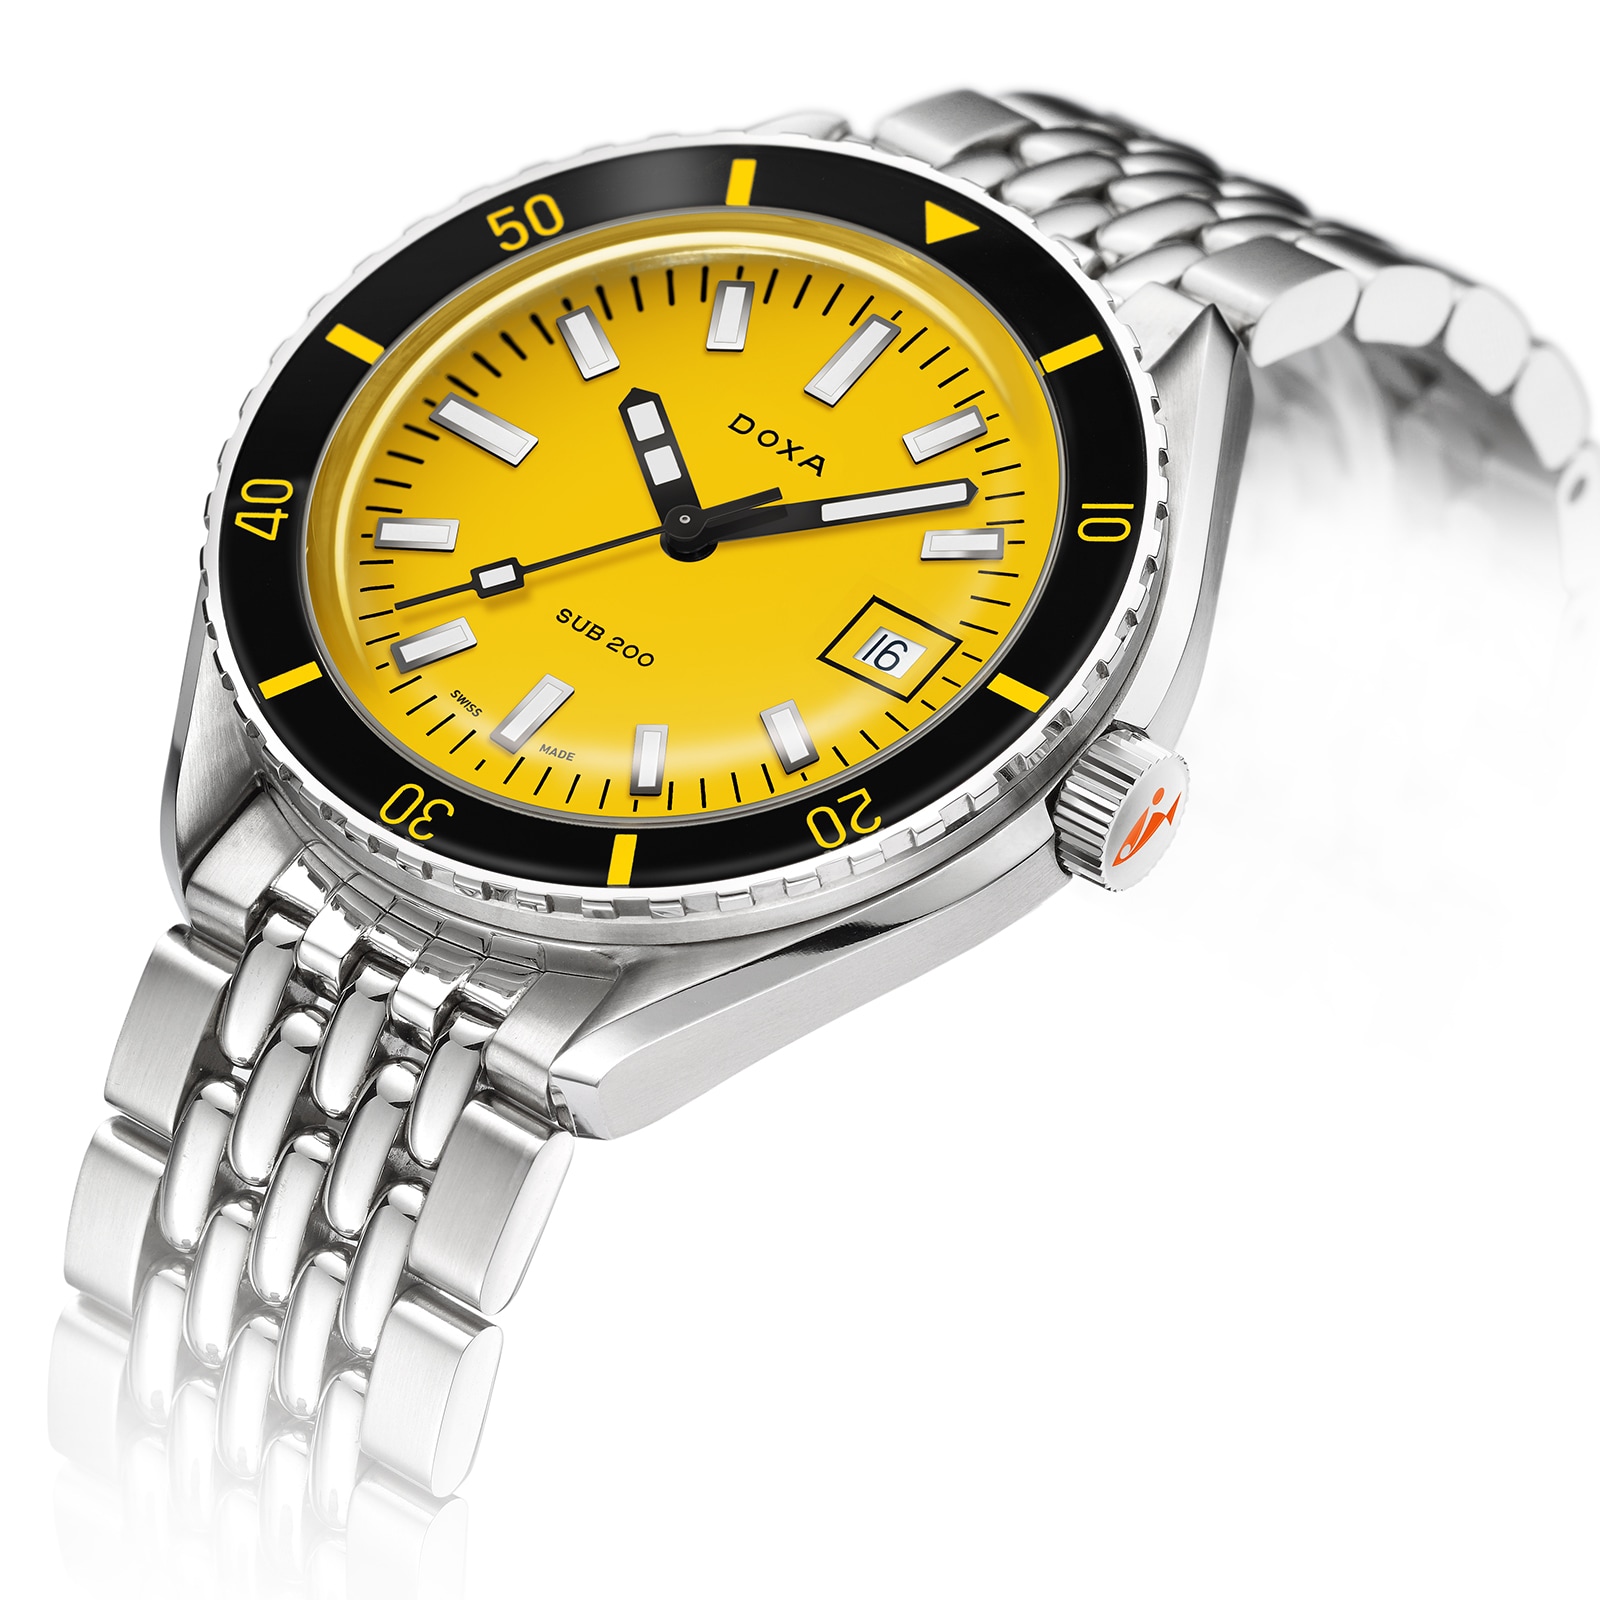 Doxa Anti-Magnetic 14K Rose Gold Mechanical Vintage Men's Watch 56982 – ELI  ADAMS JEWELERS